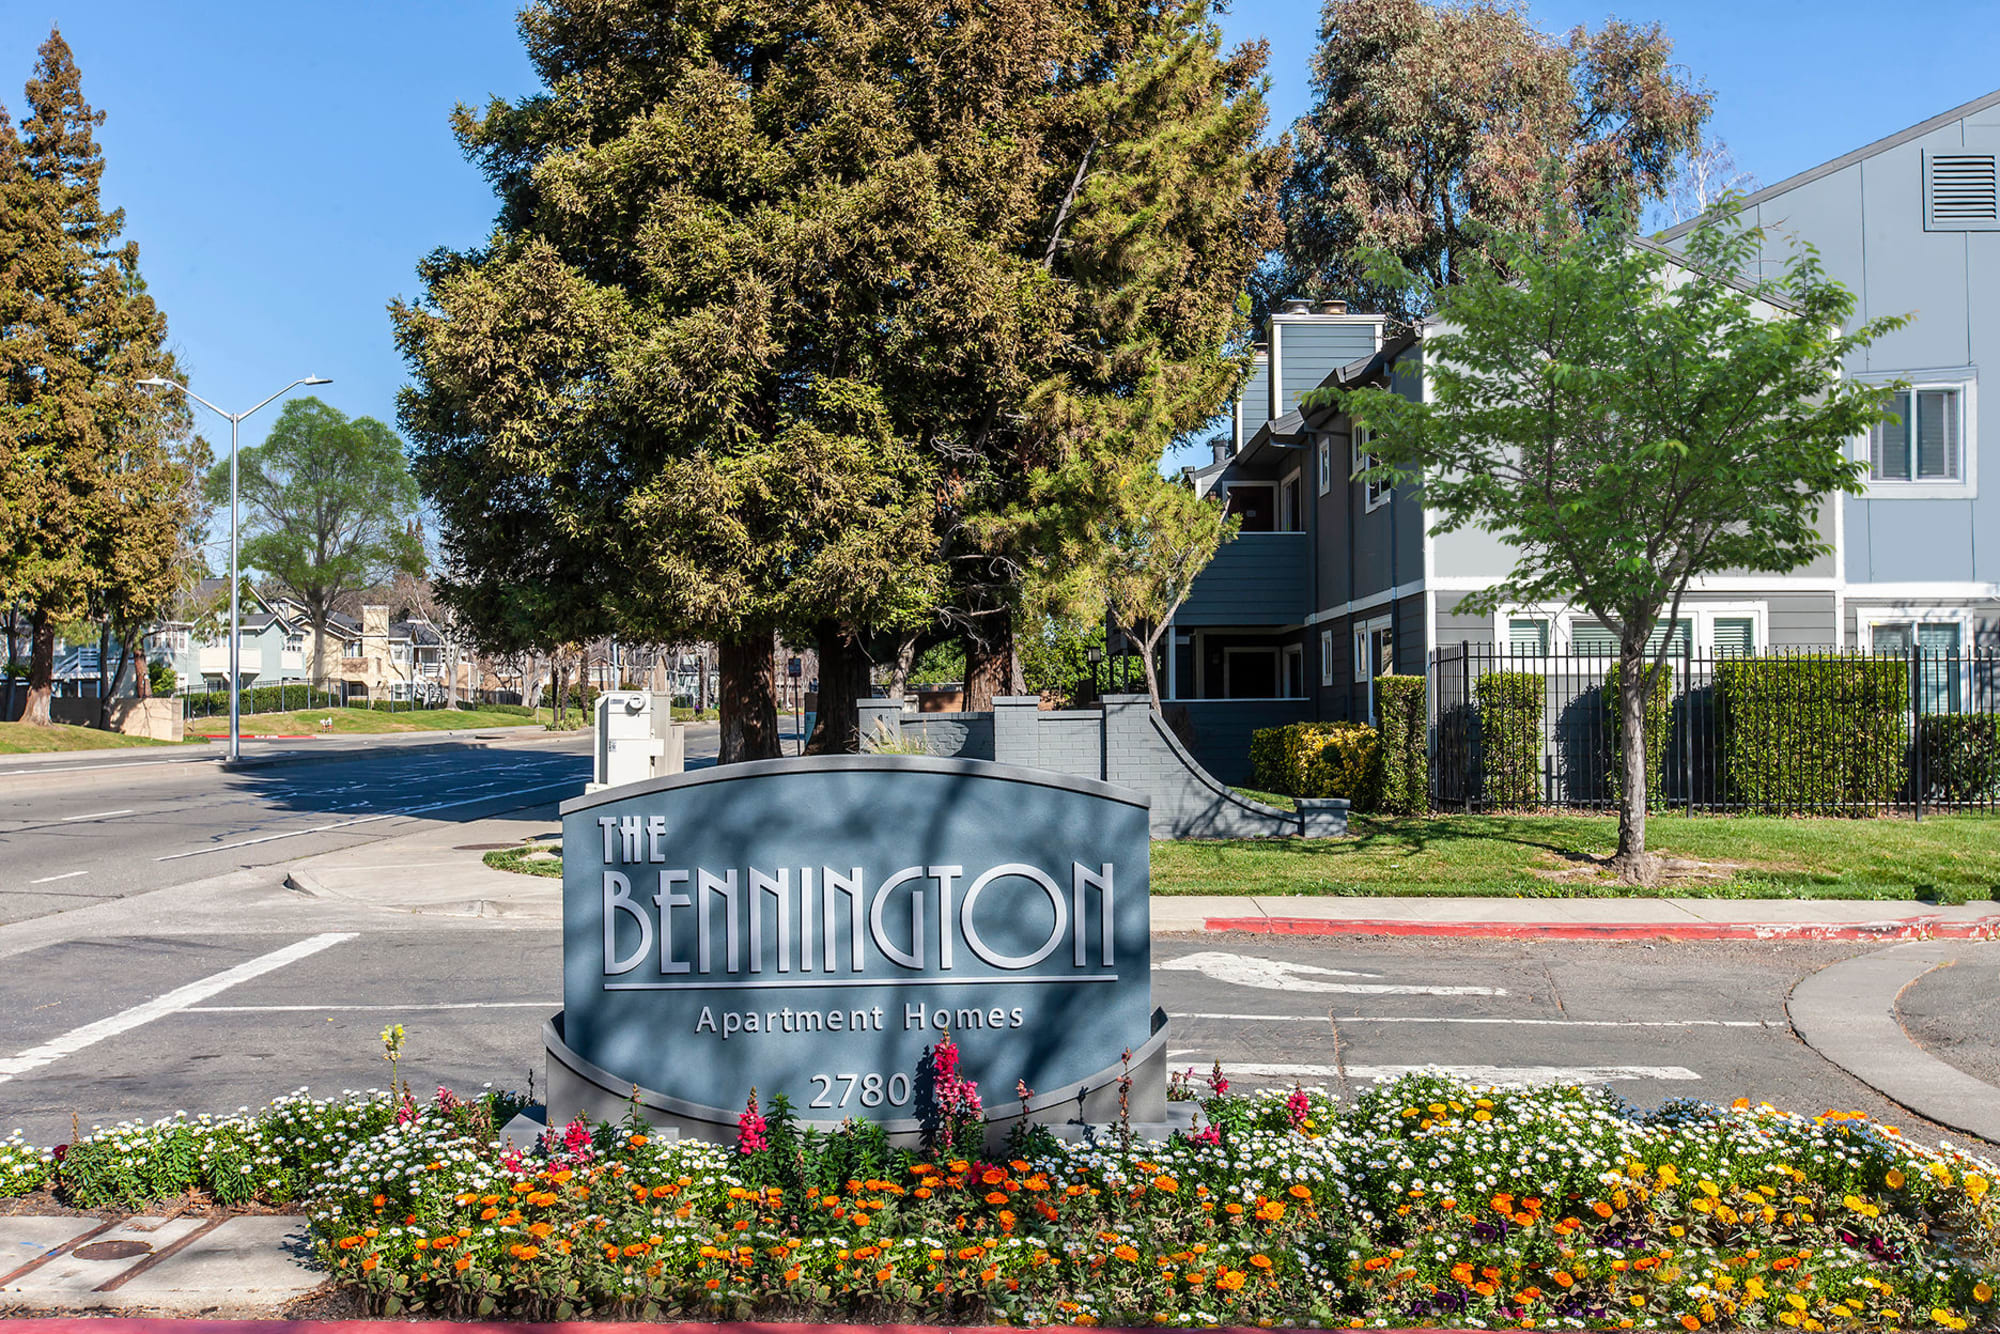 The monument sign at Bennington Apartments in Fairfield, California